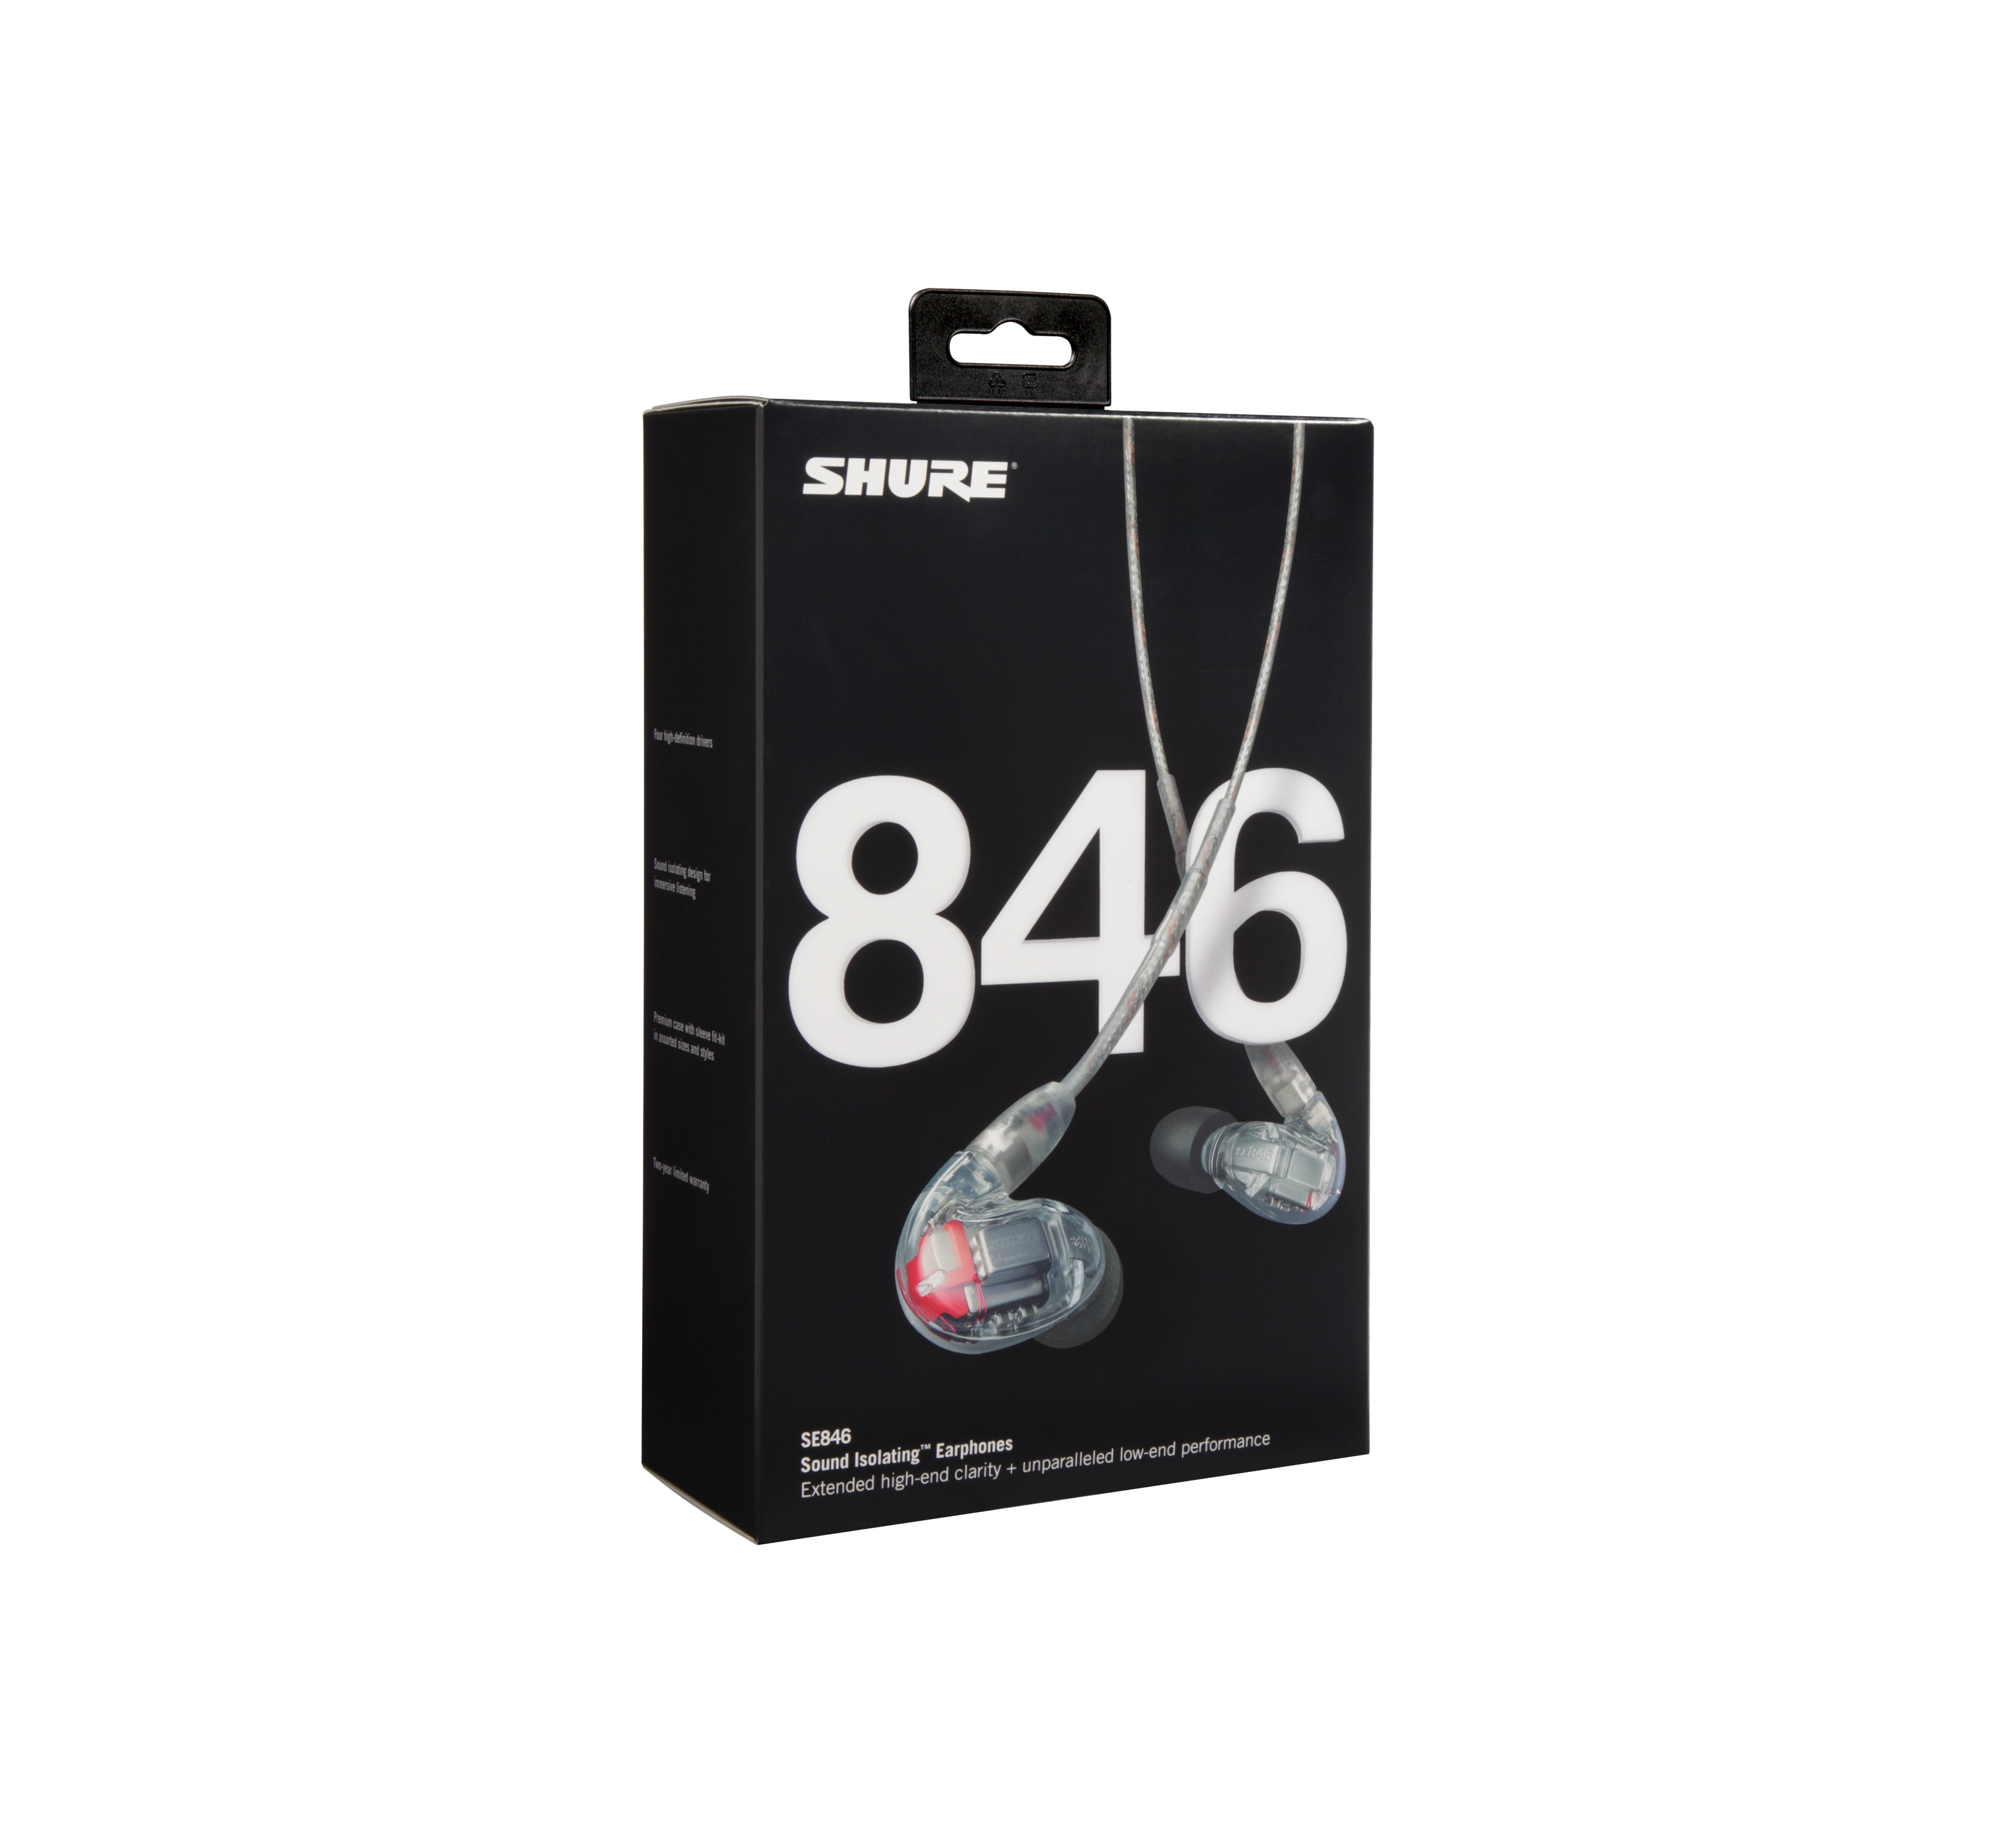 Shure SE846 Pro - Professional Sound Isolating Earphones / In-Ear Monitors